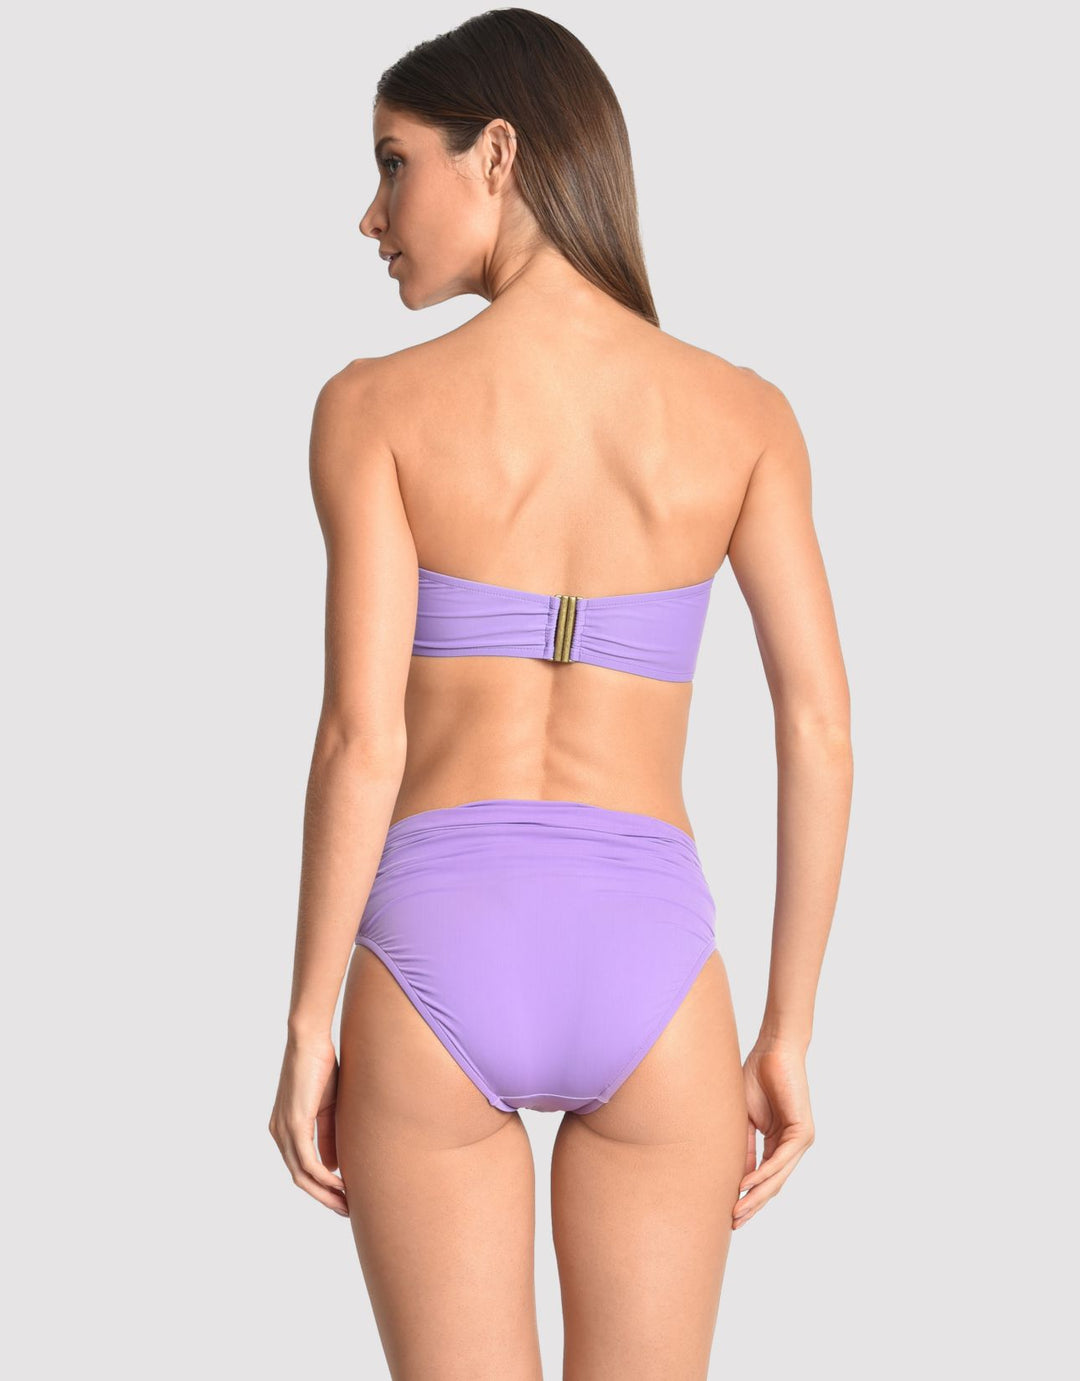 LENNY NIEMEYER Embellished Bandeau Bikini Top in Quartz